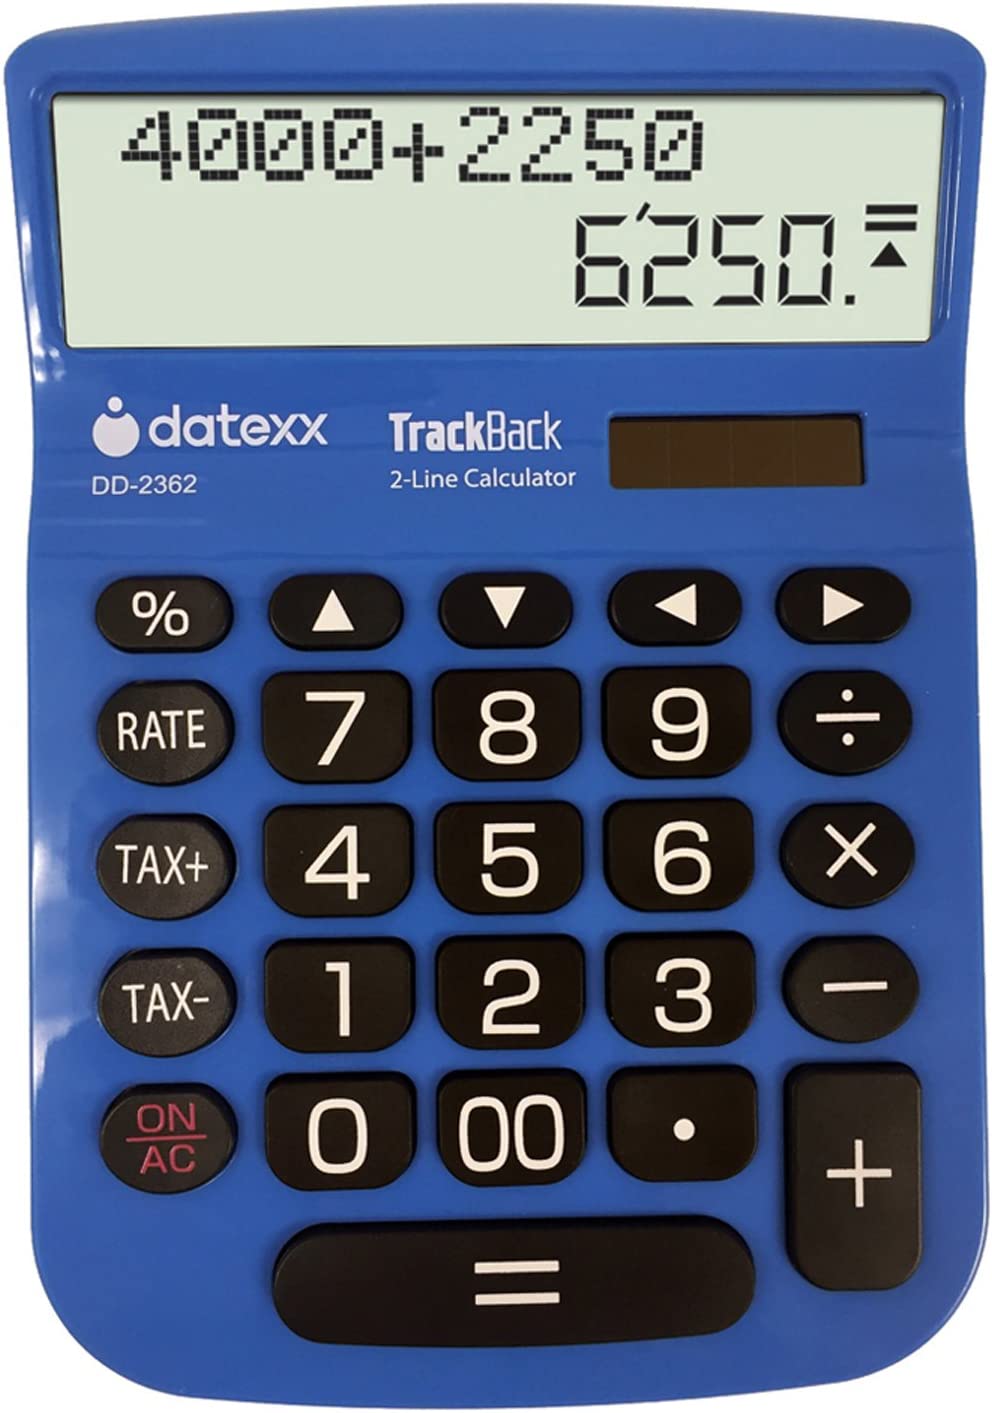 Teledex DTXDD2362 2-Line TrackBack Large Desktop Calculator